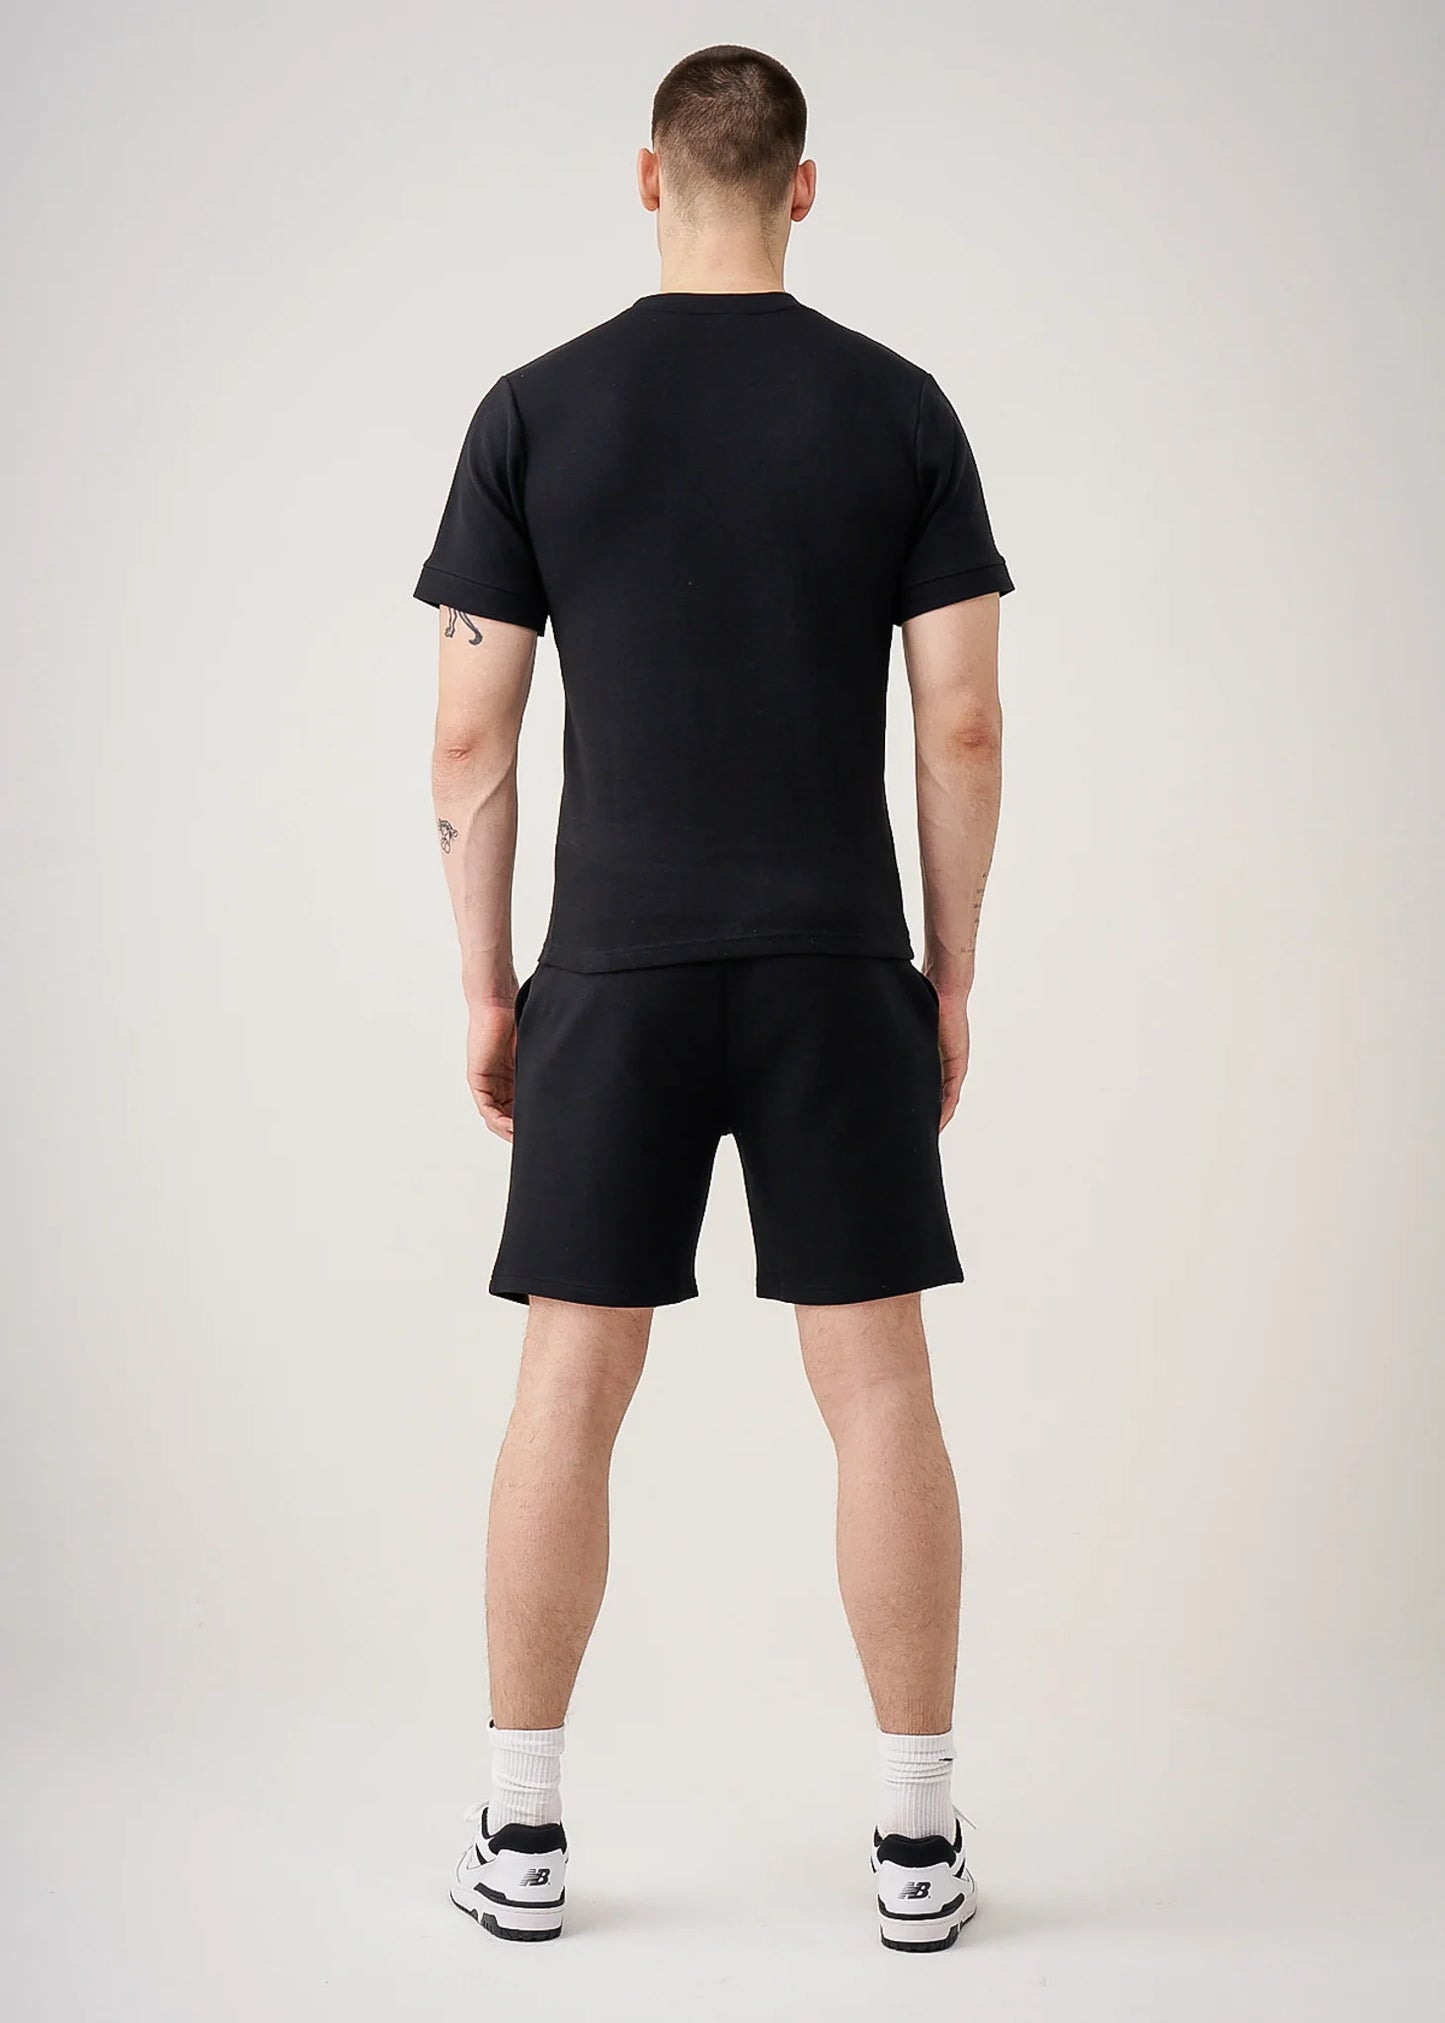 Black 12 Ounce Heatguard Interlock Lycra T-Shirt Short Set